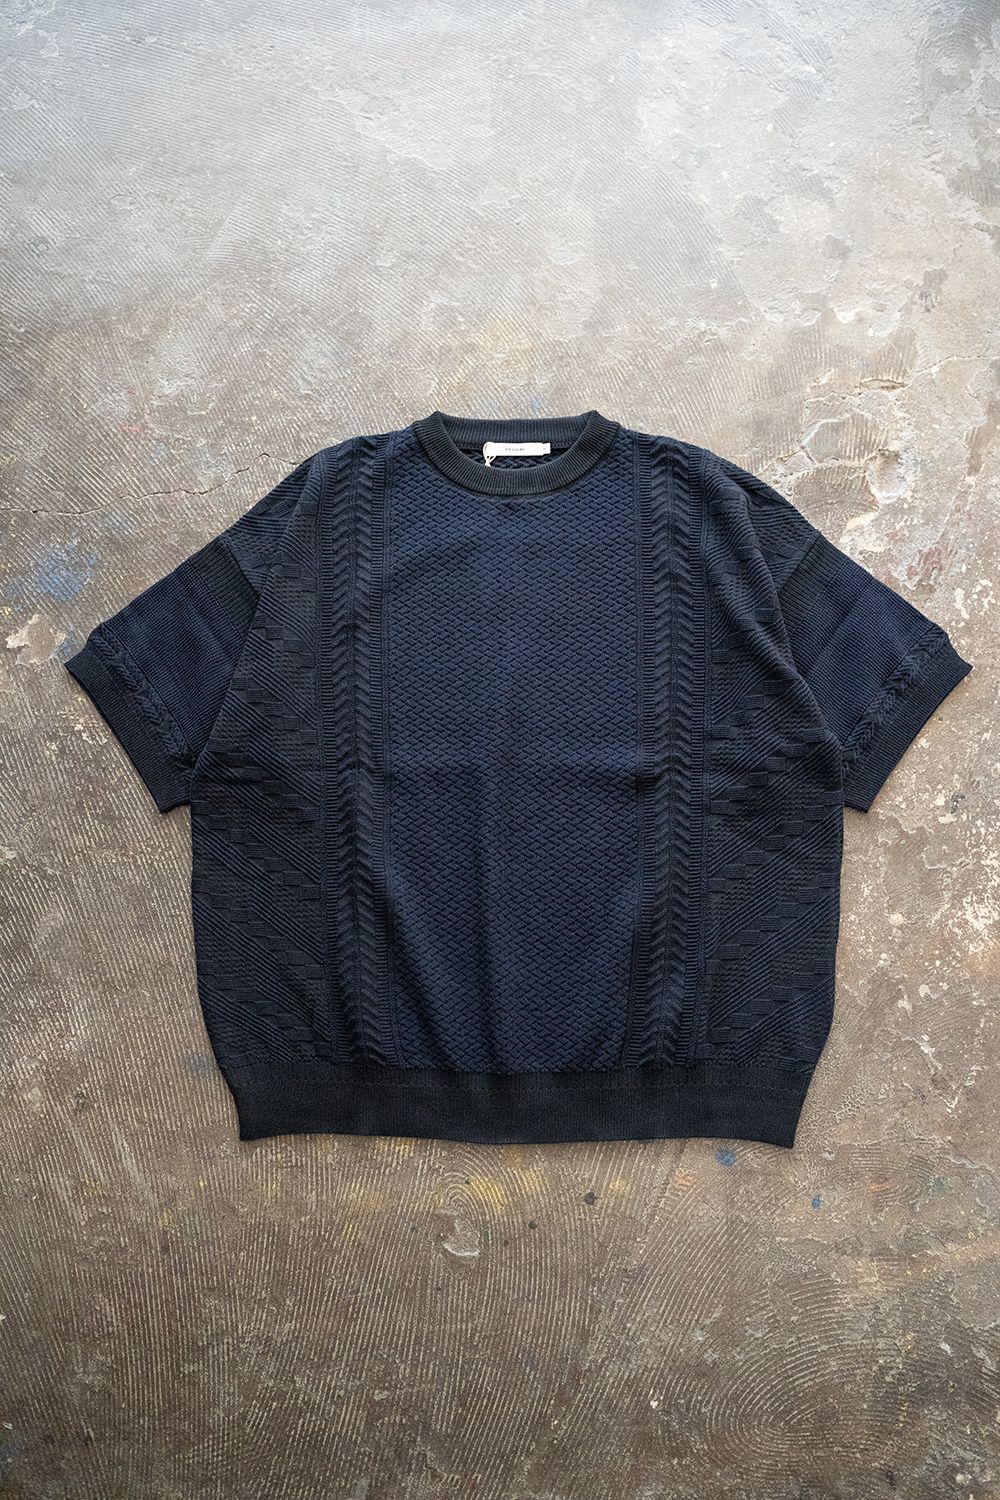 YASHIKI Seijaku Knit サイズ1 ブラック【22aw】 - ニット/セーター